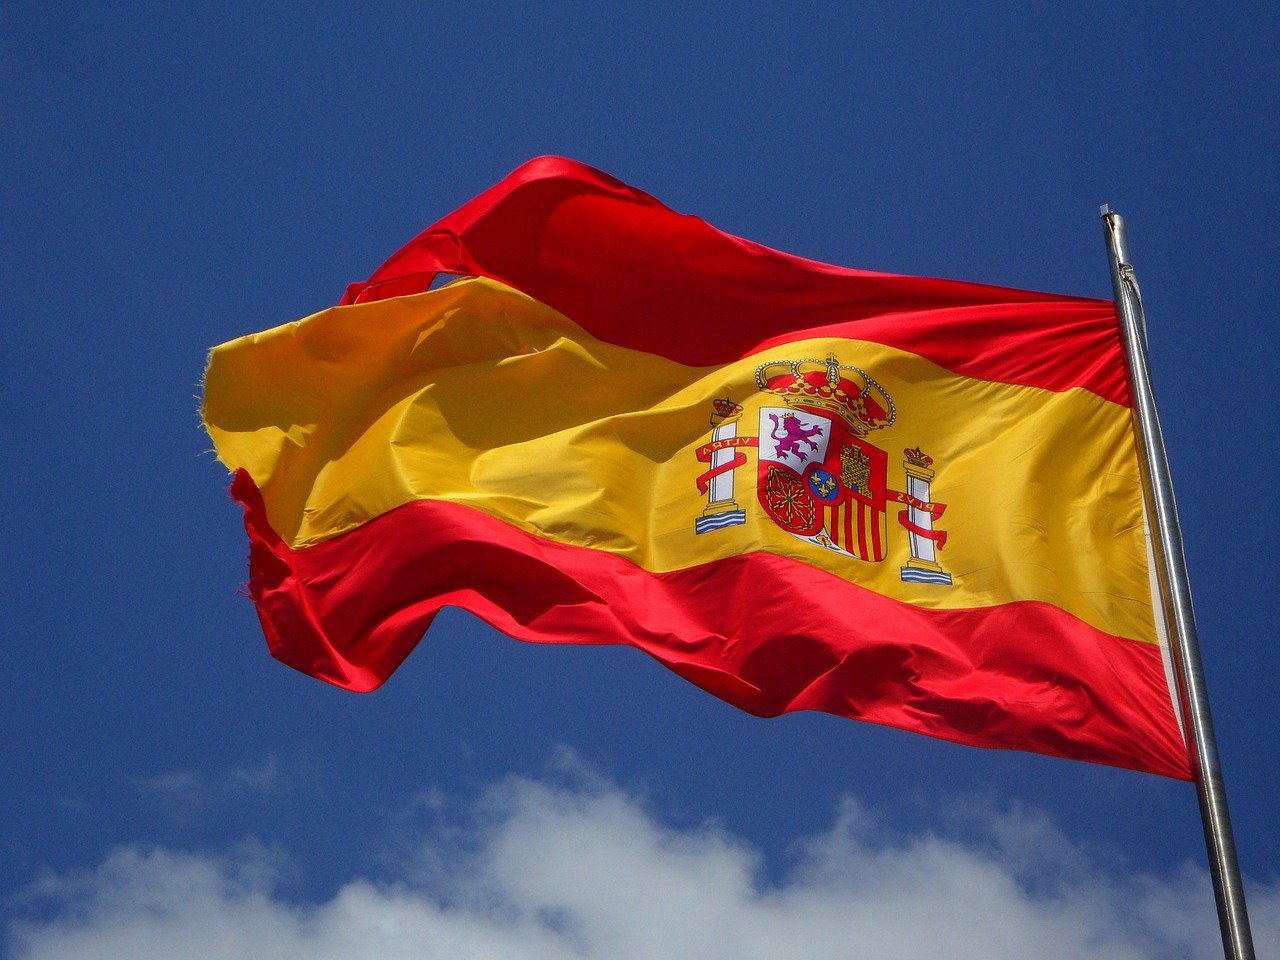 Spanish nationality